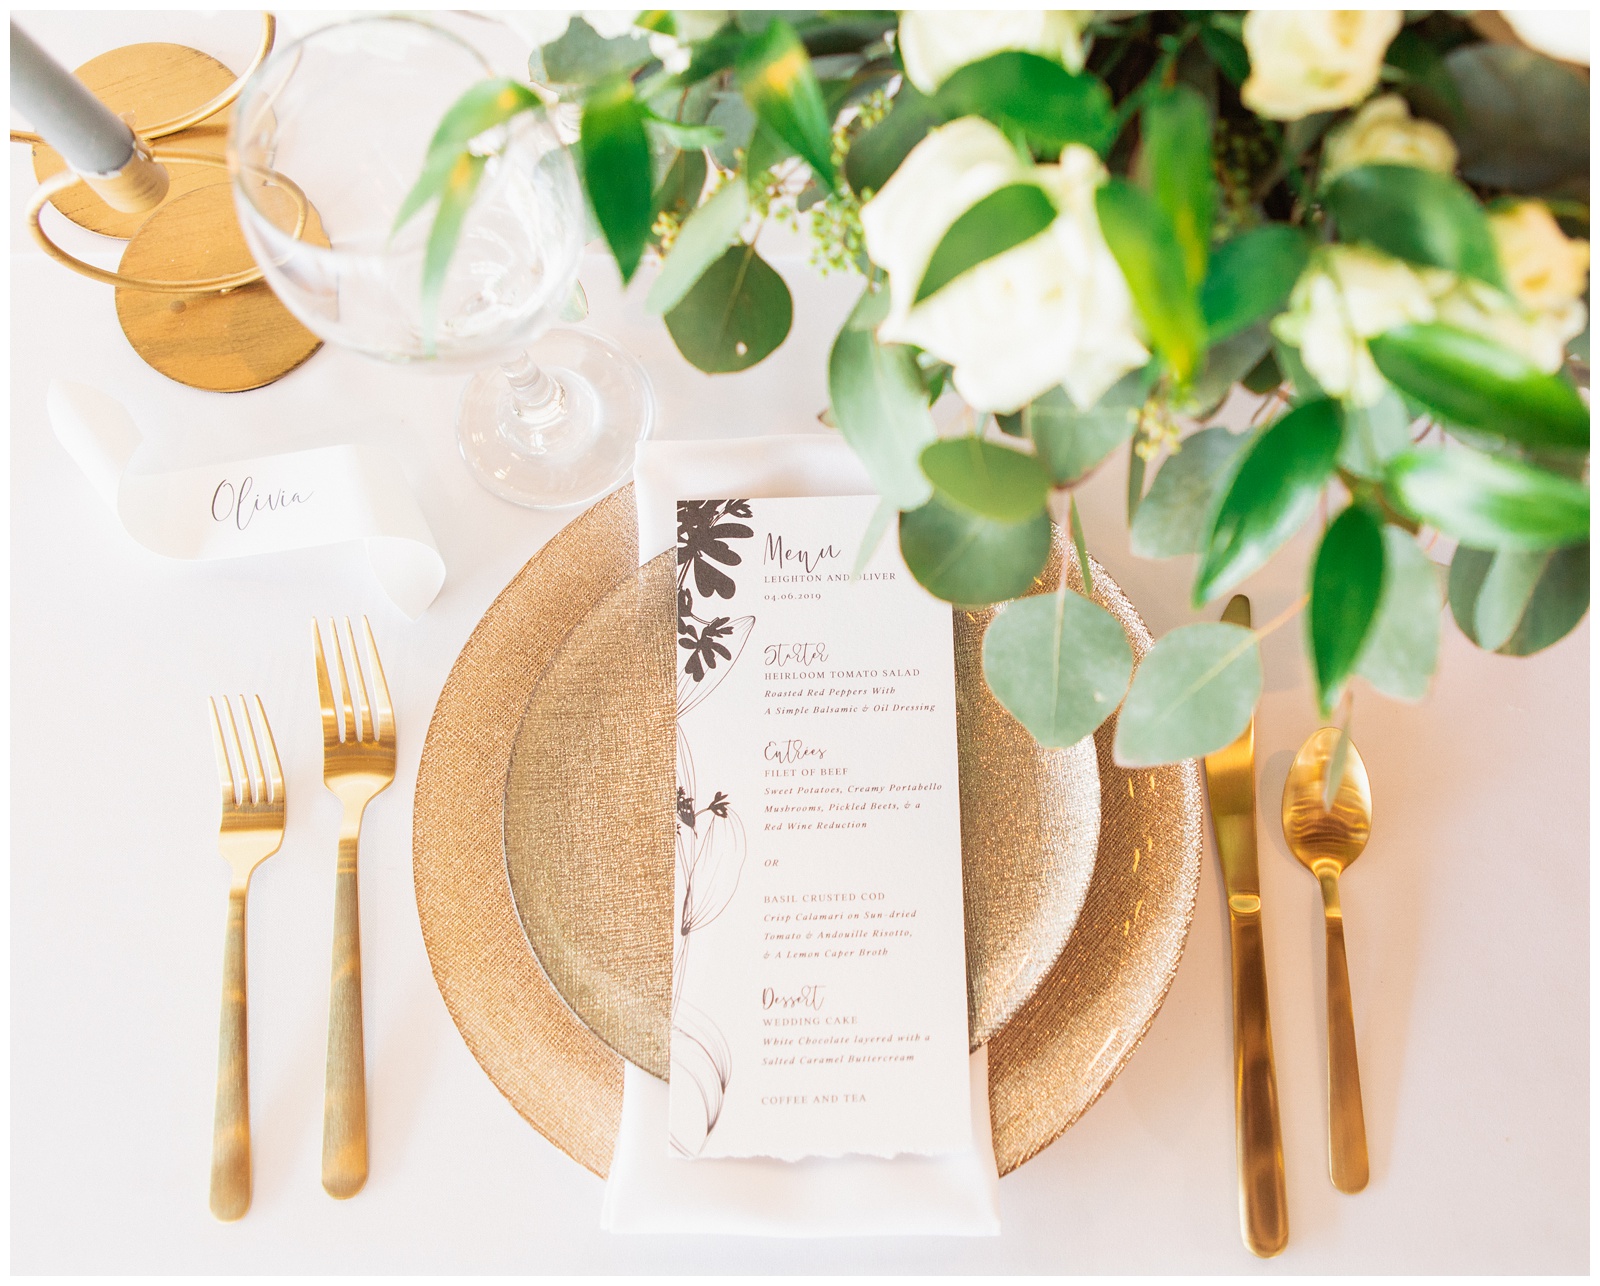 Wedding menu and reception - Matlock and Kelly Photography